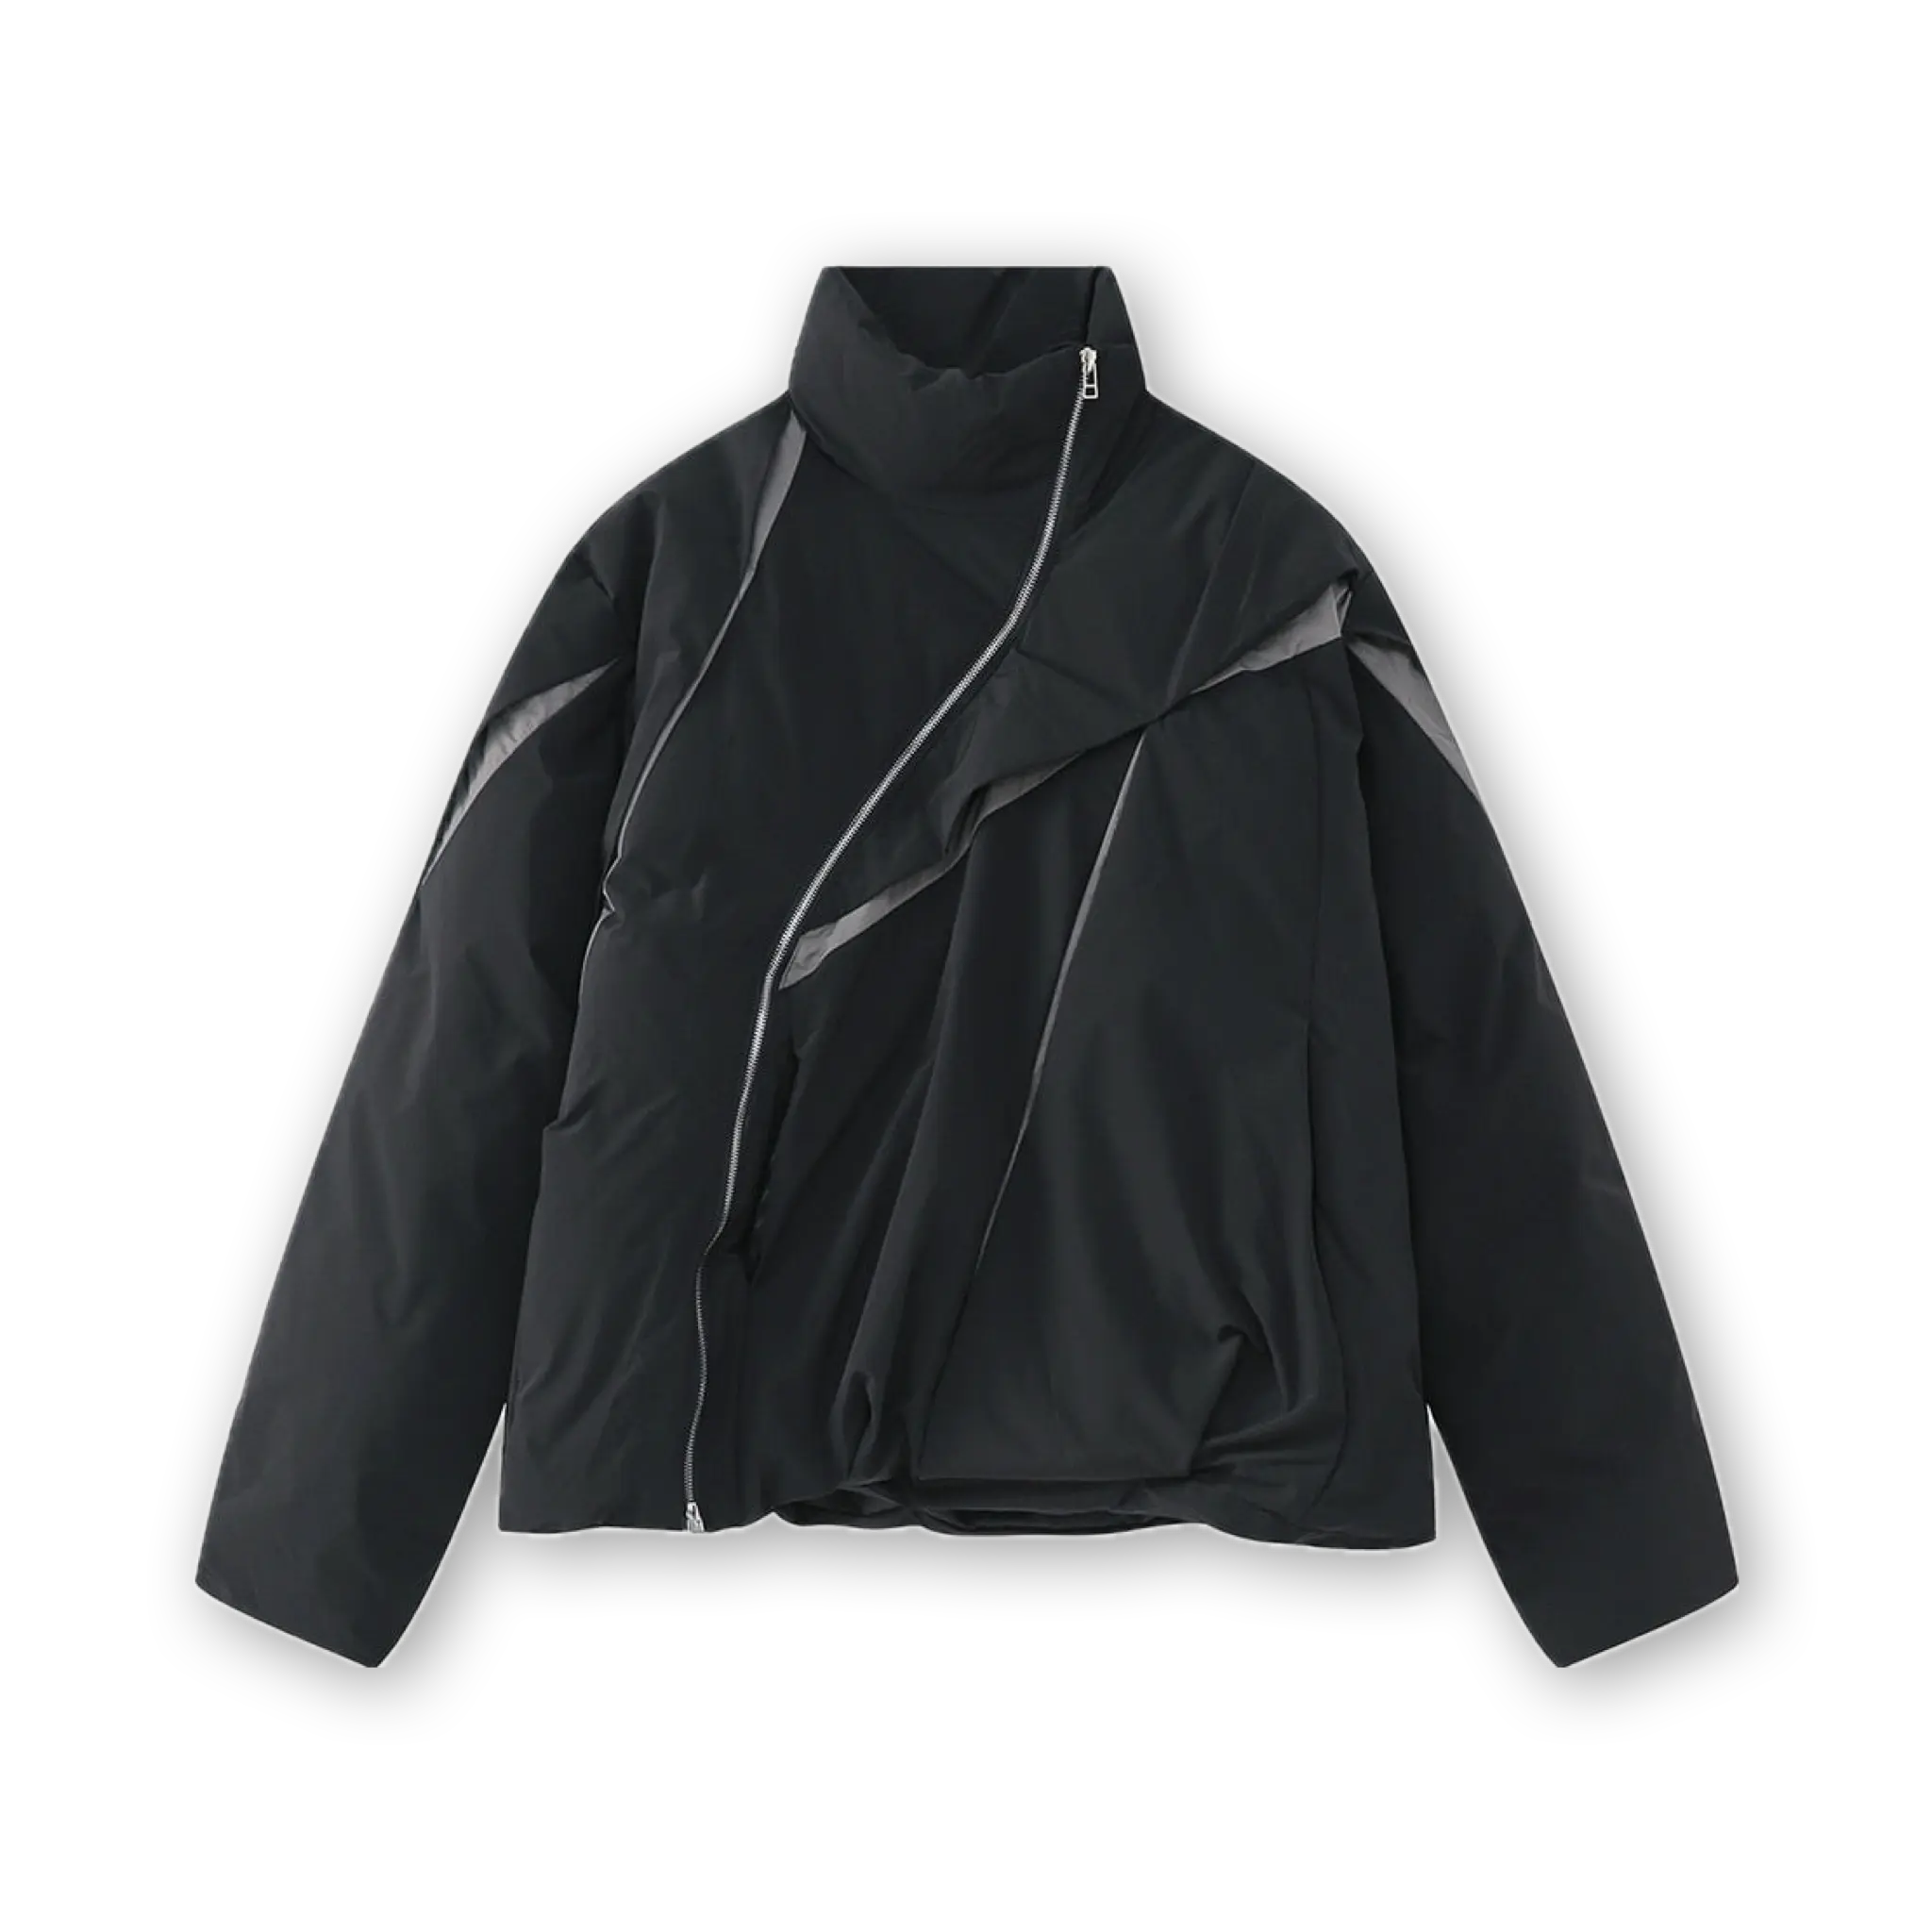 SLICED PUFFER - Void Studio 139.95 Void Studio Puffer Jackets, Hoodies for men cheap, hoodies black-M